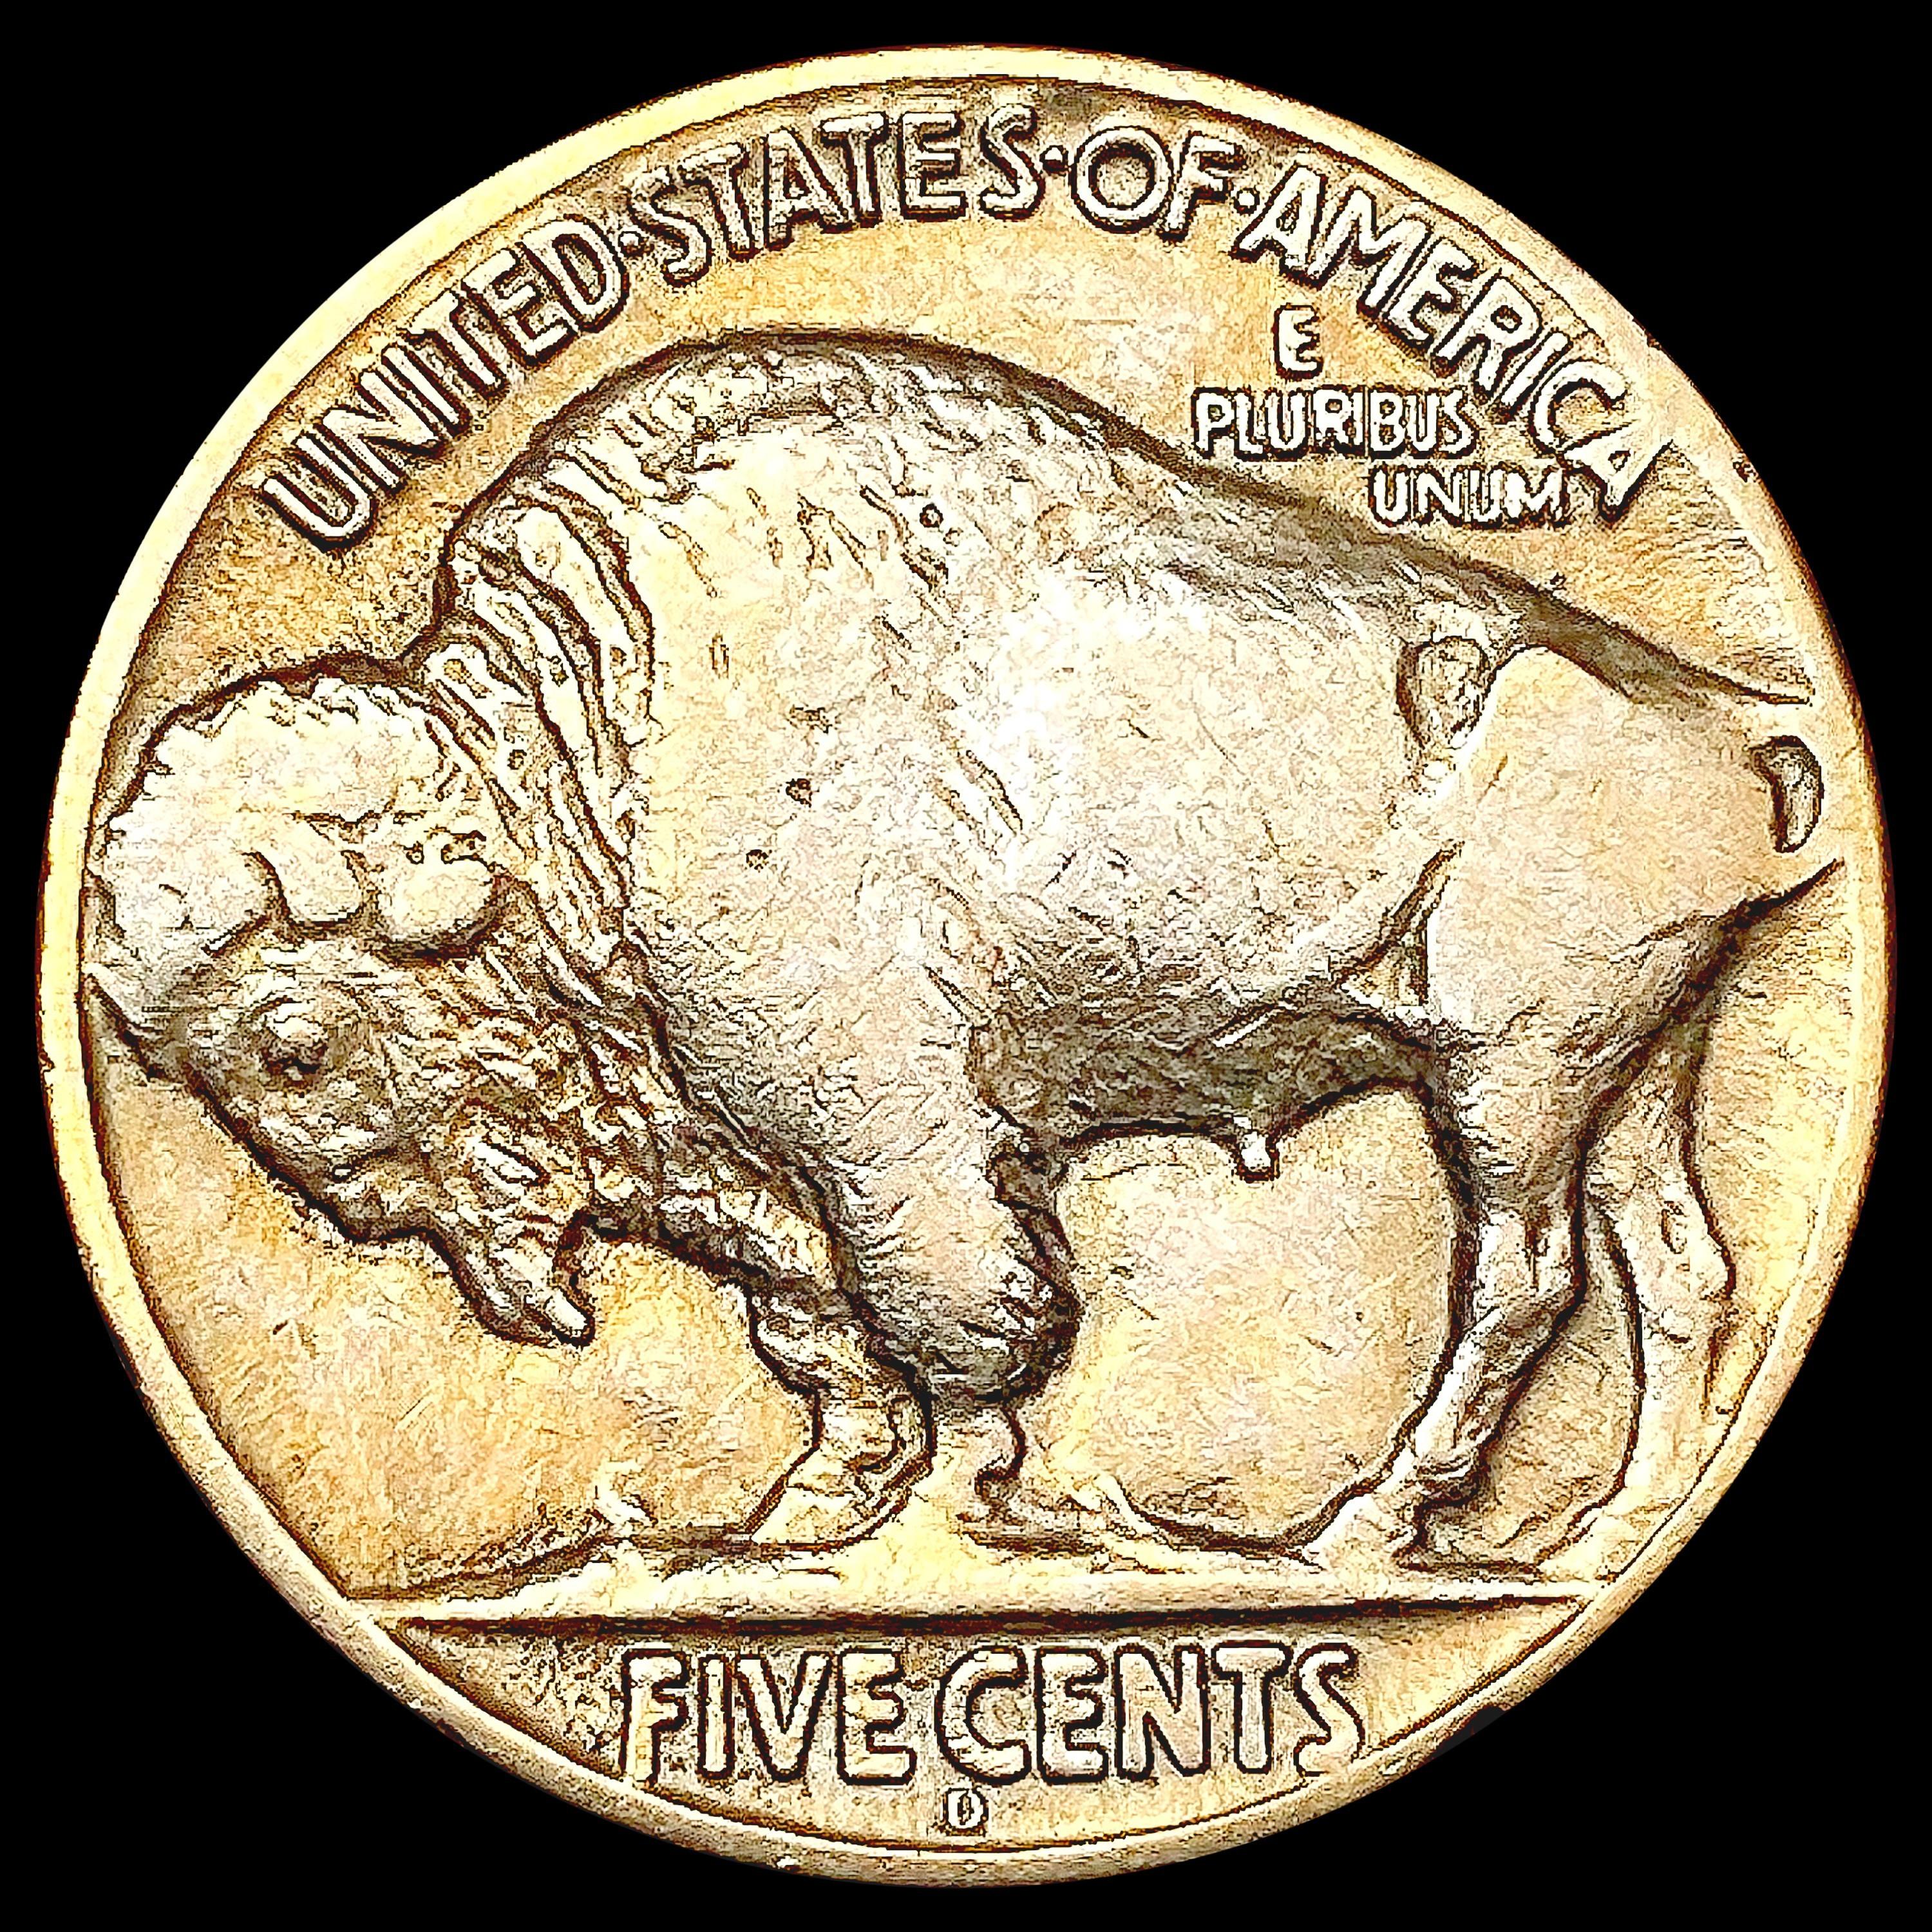 1927-D Buffalo Nickel NEARLY UNCIRCULATED